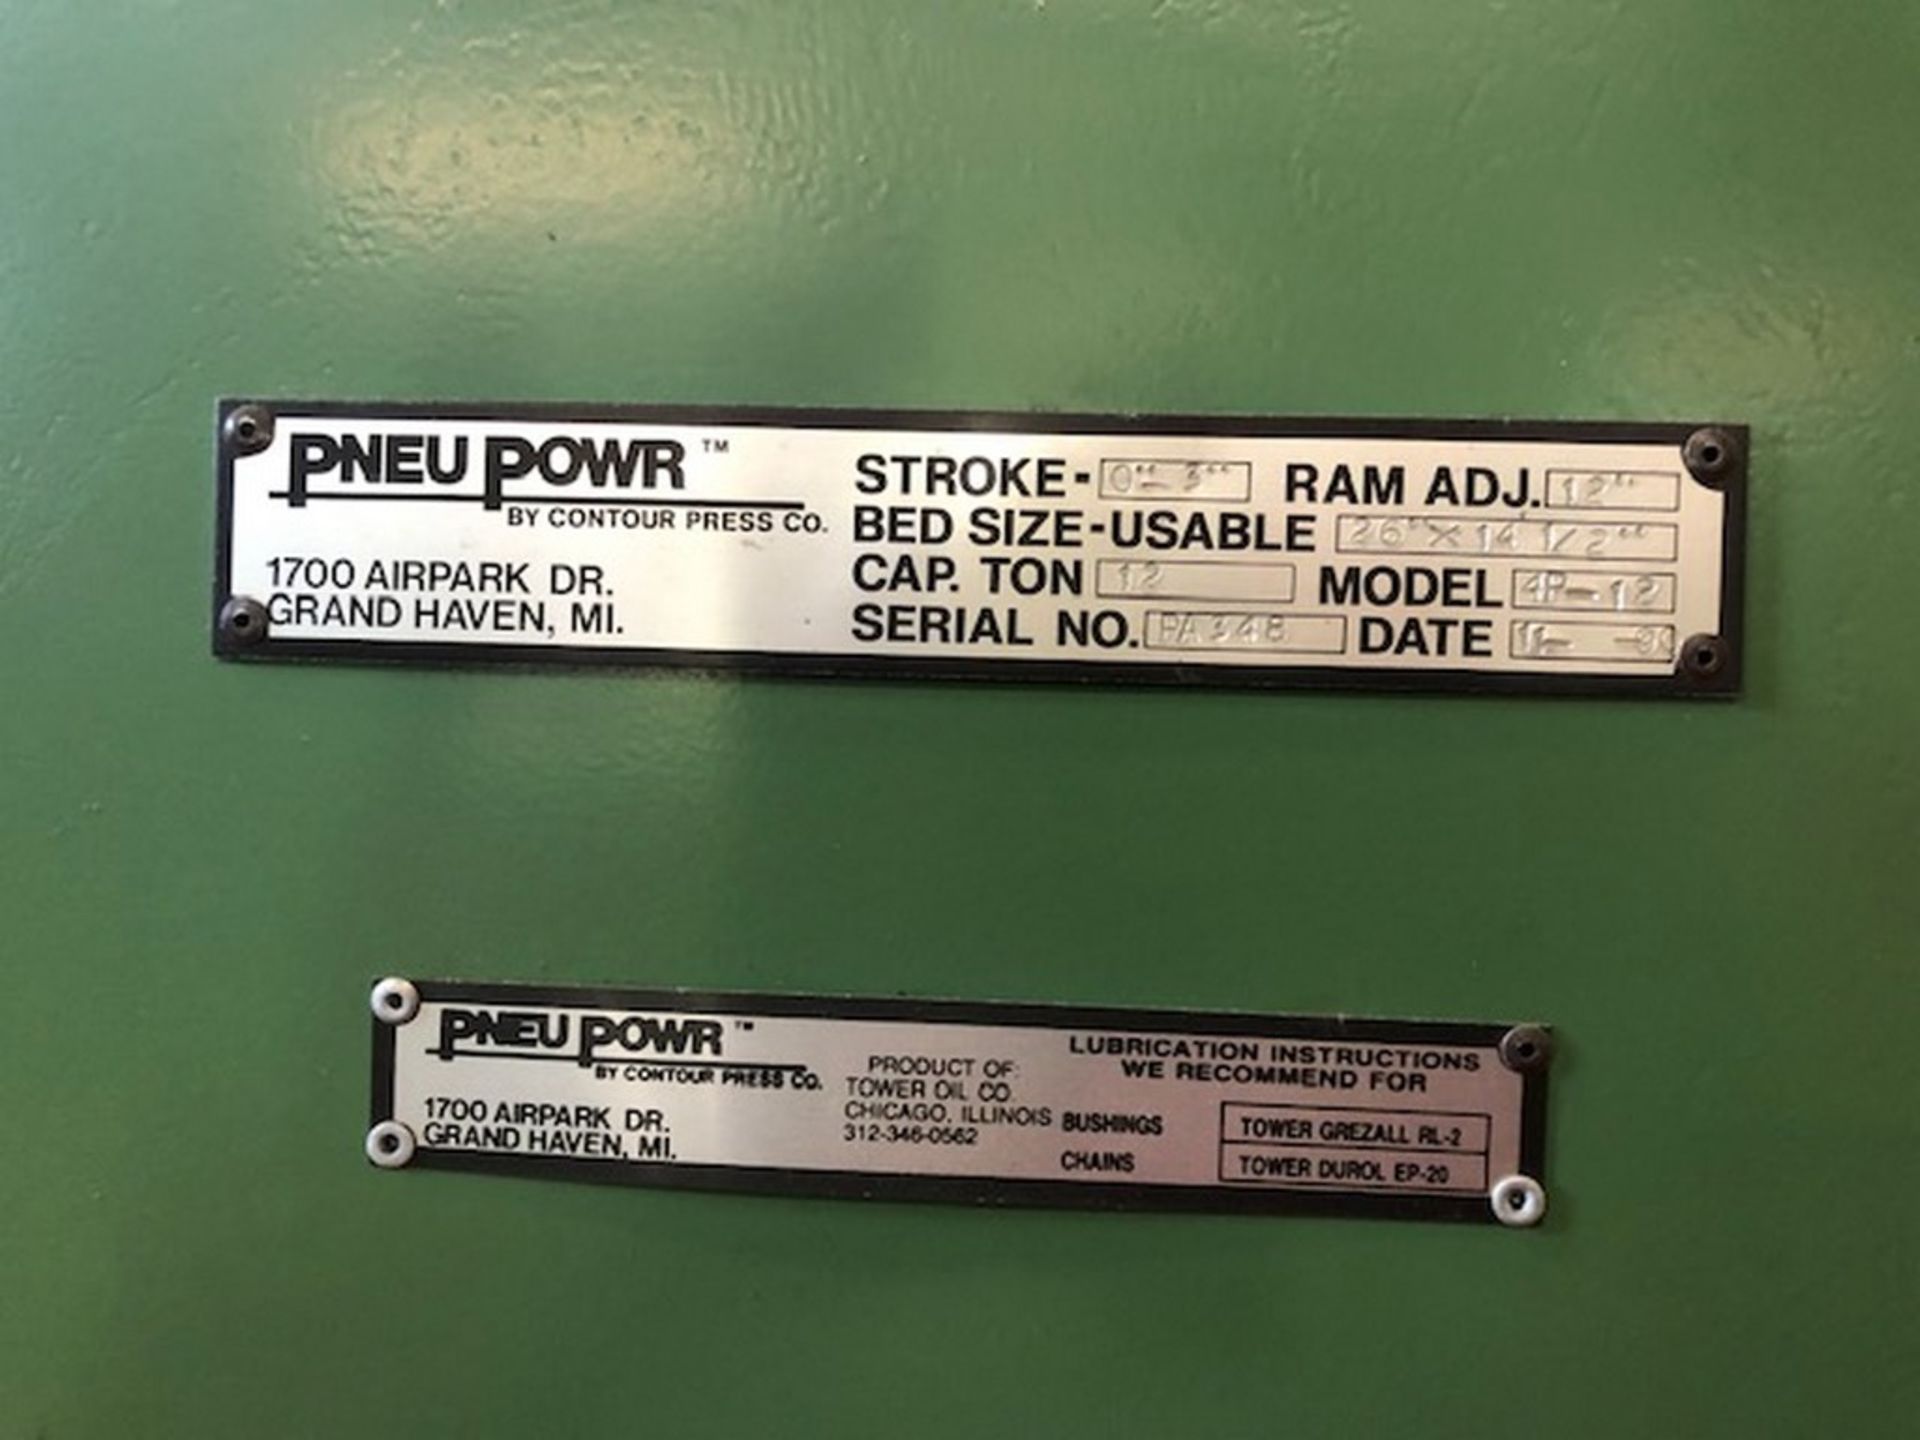 PNUE POWER 12 TON MODEL 4P-12 PNEUMATIC CUT-OFF, S/N PA348, 0-3" STROKE, 12" RAM ADJUSTMENT ( - Image 7 of 7